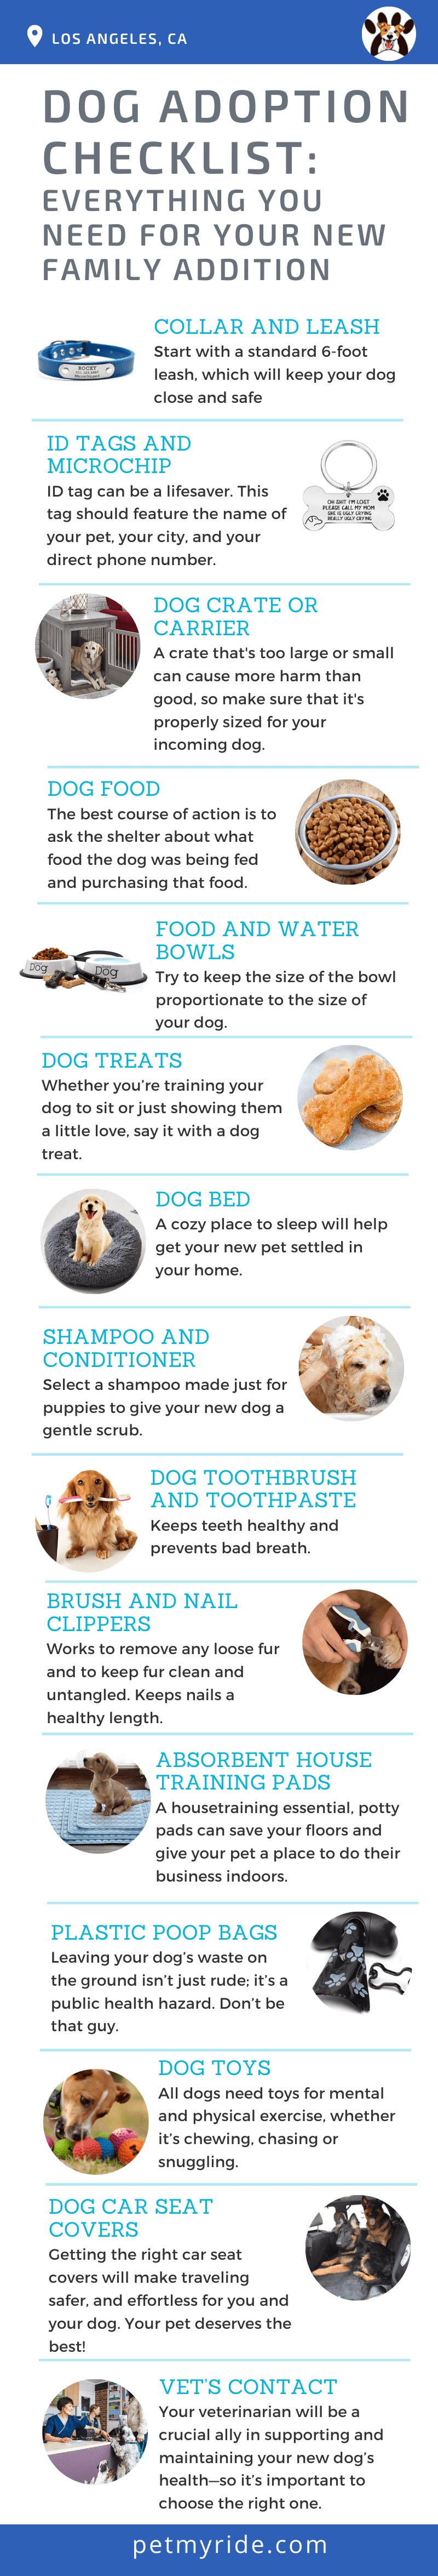 infographics about dog adoption checklist